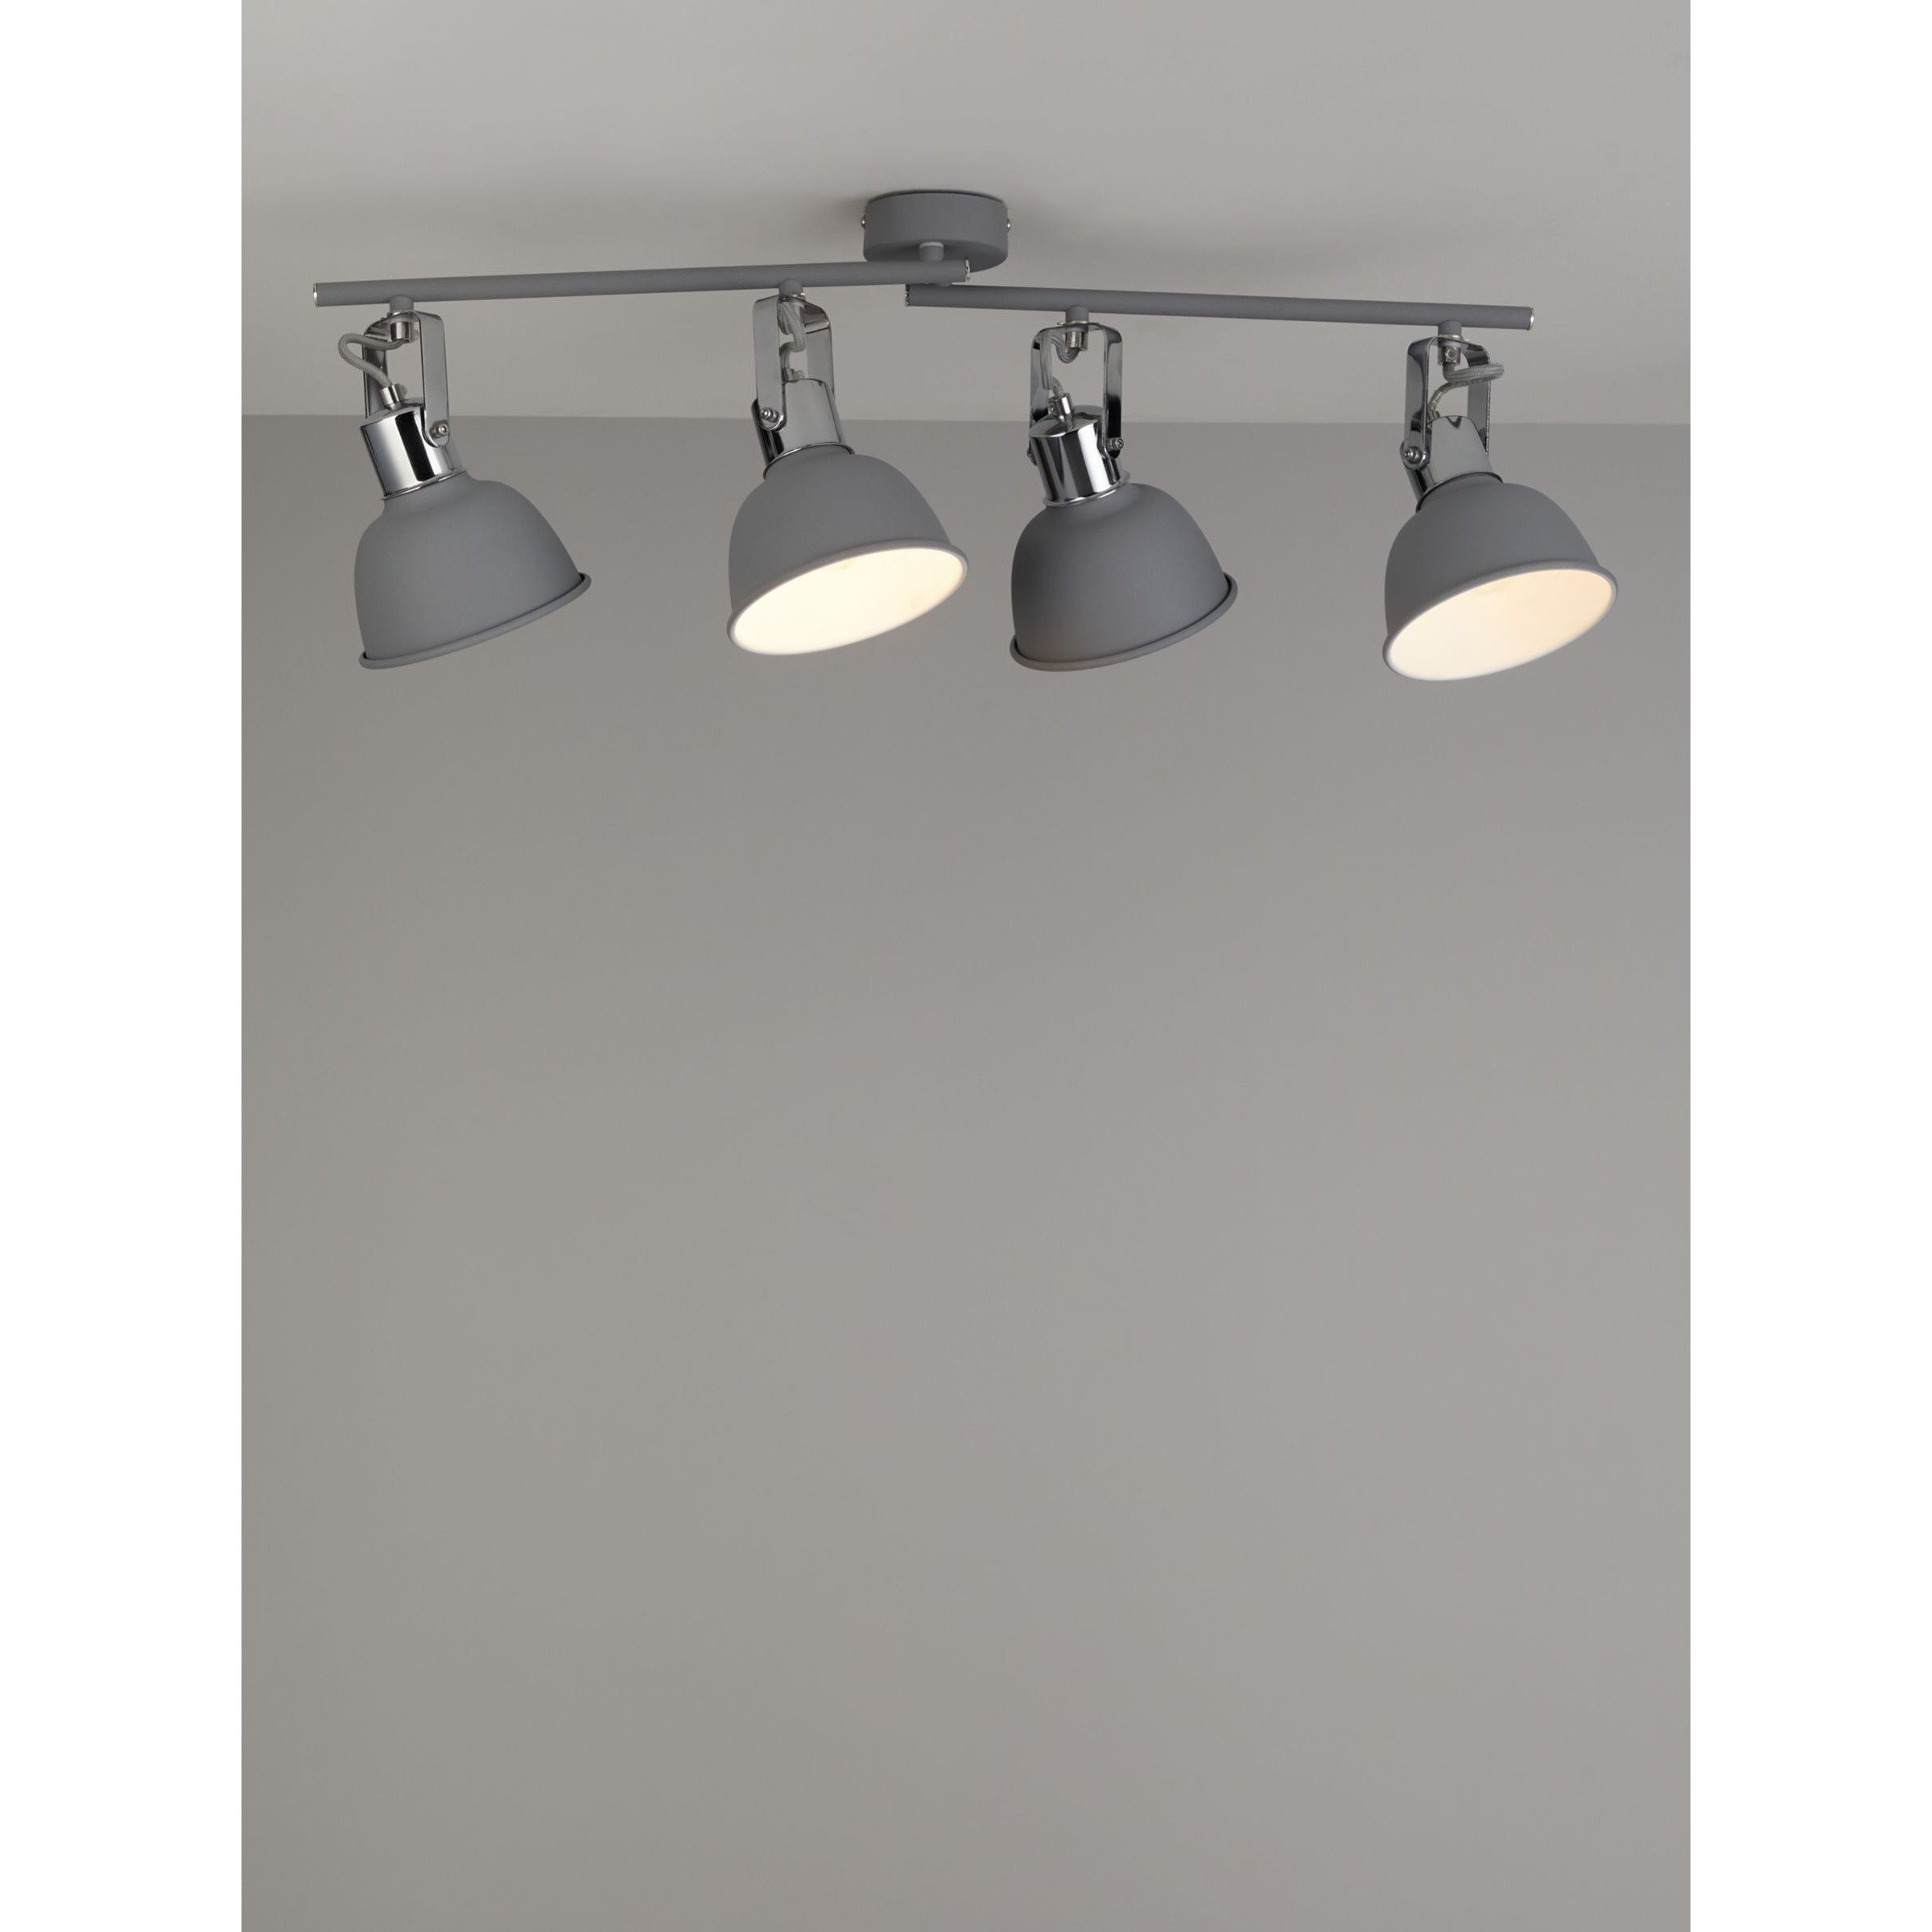 John Lewis SES LED 4 Spotlight Ceiling Bar, Grey - image 1